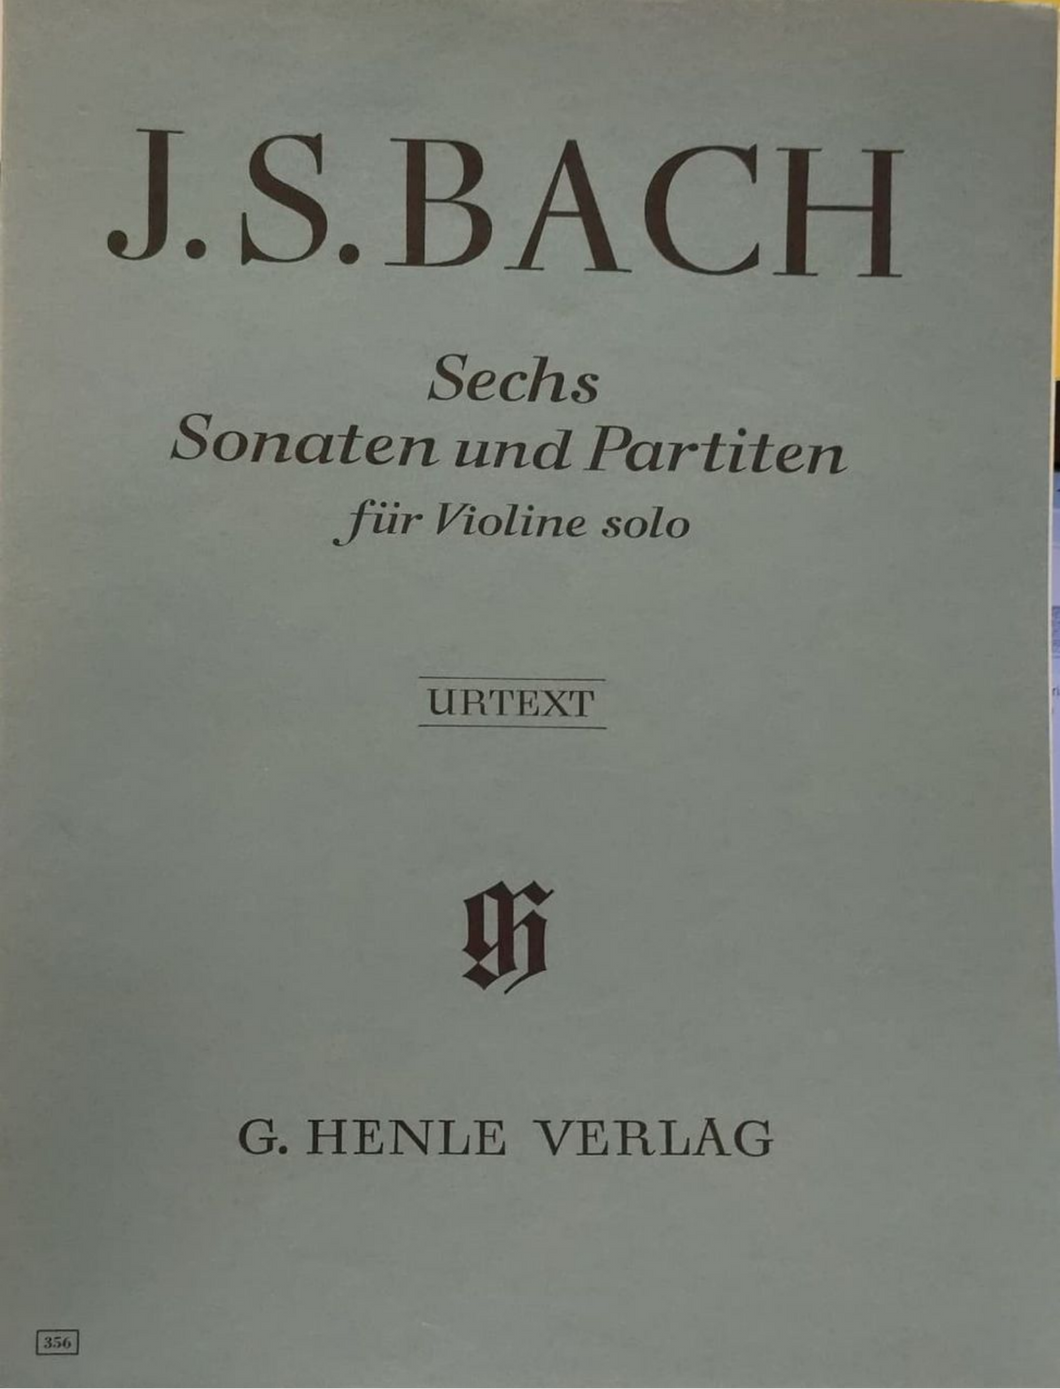 JOHANN SEBASTIAN BACH: Sonatas and Partitas for Violin solo